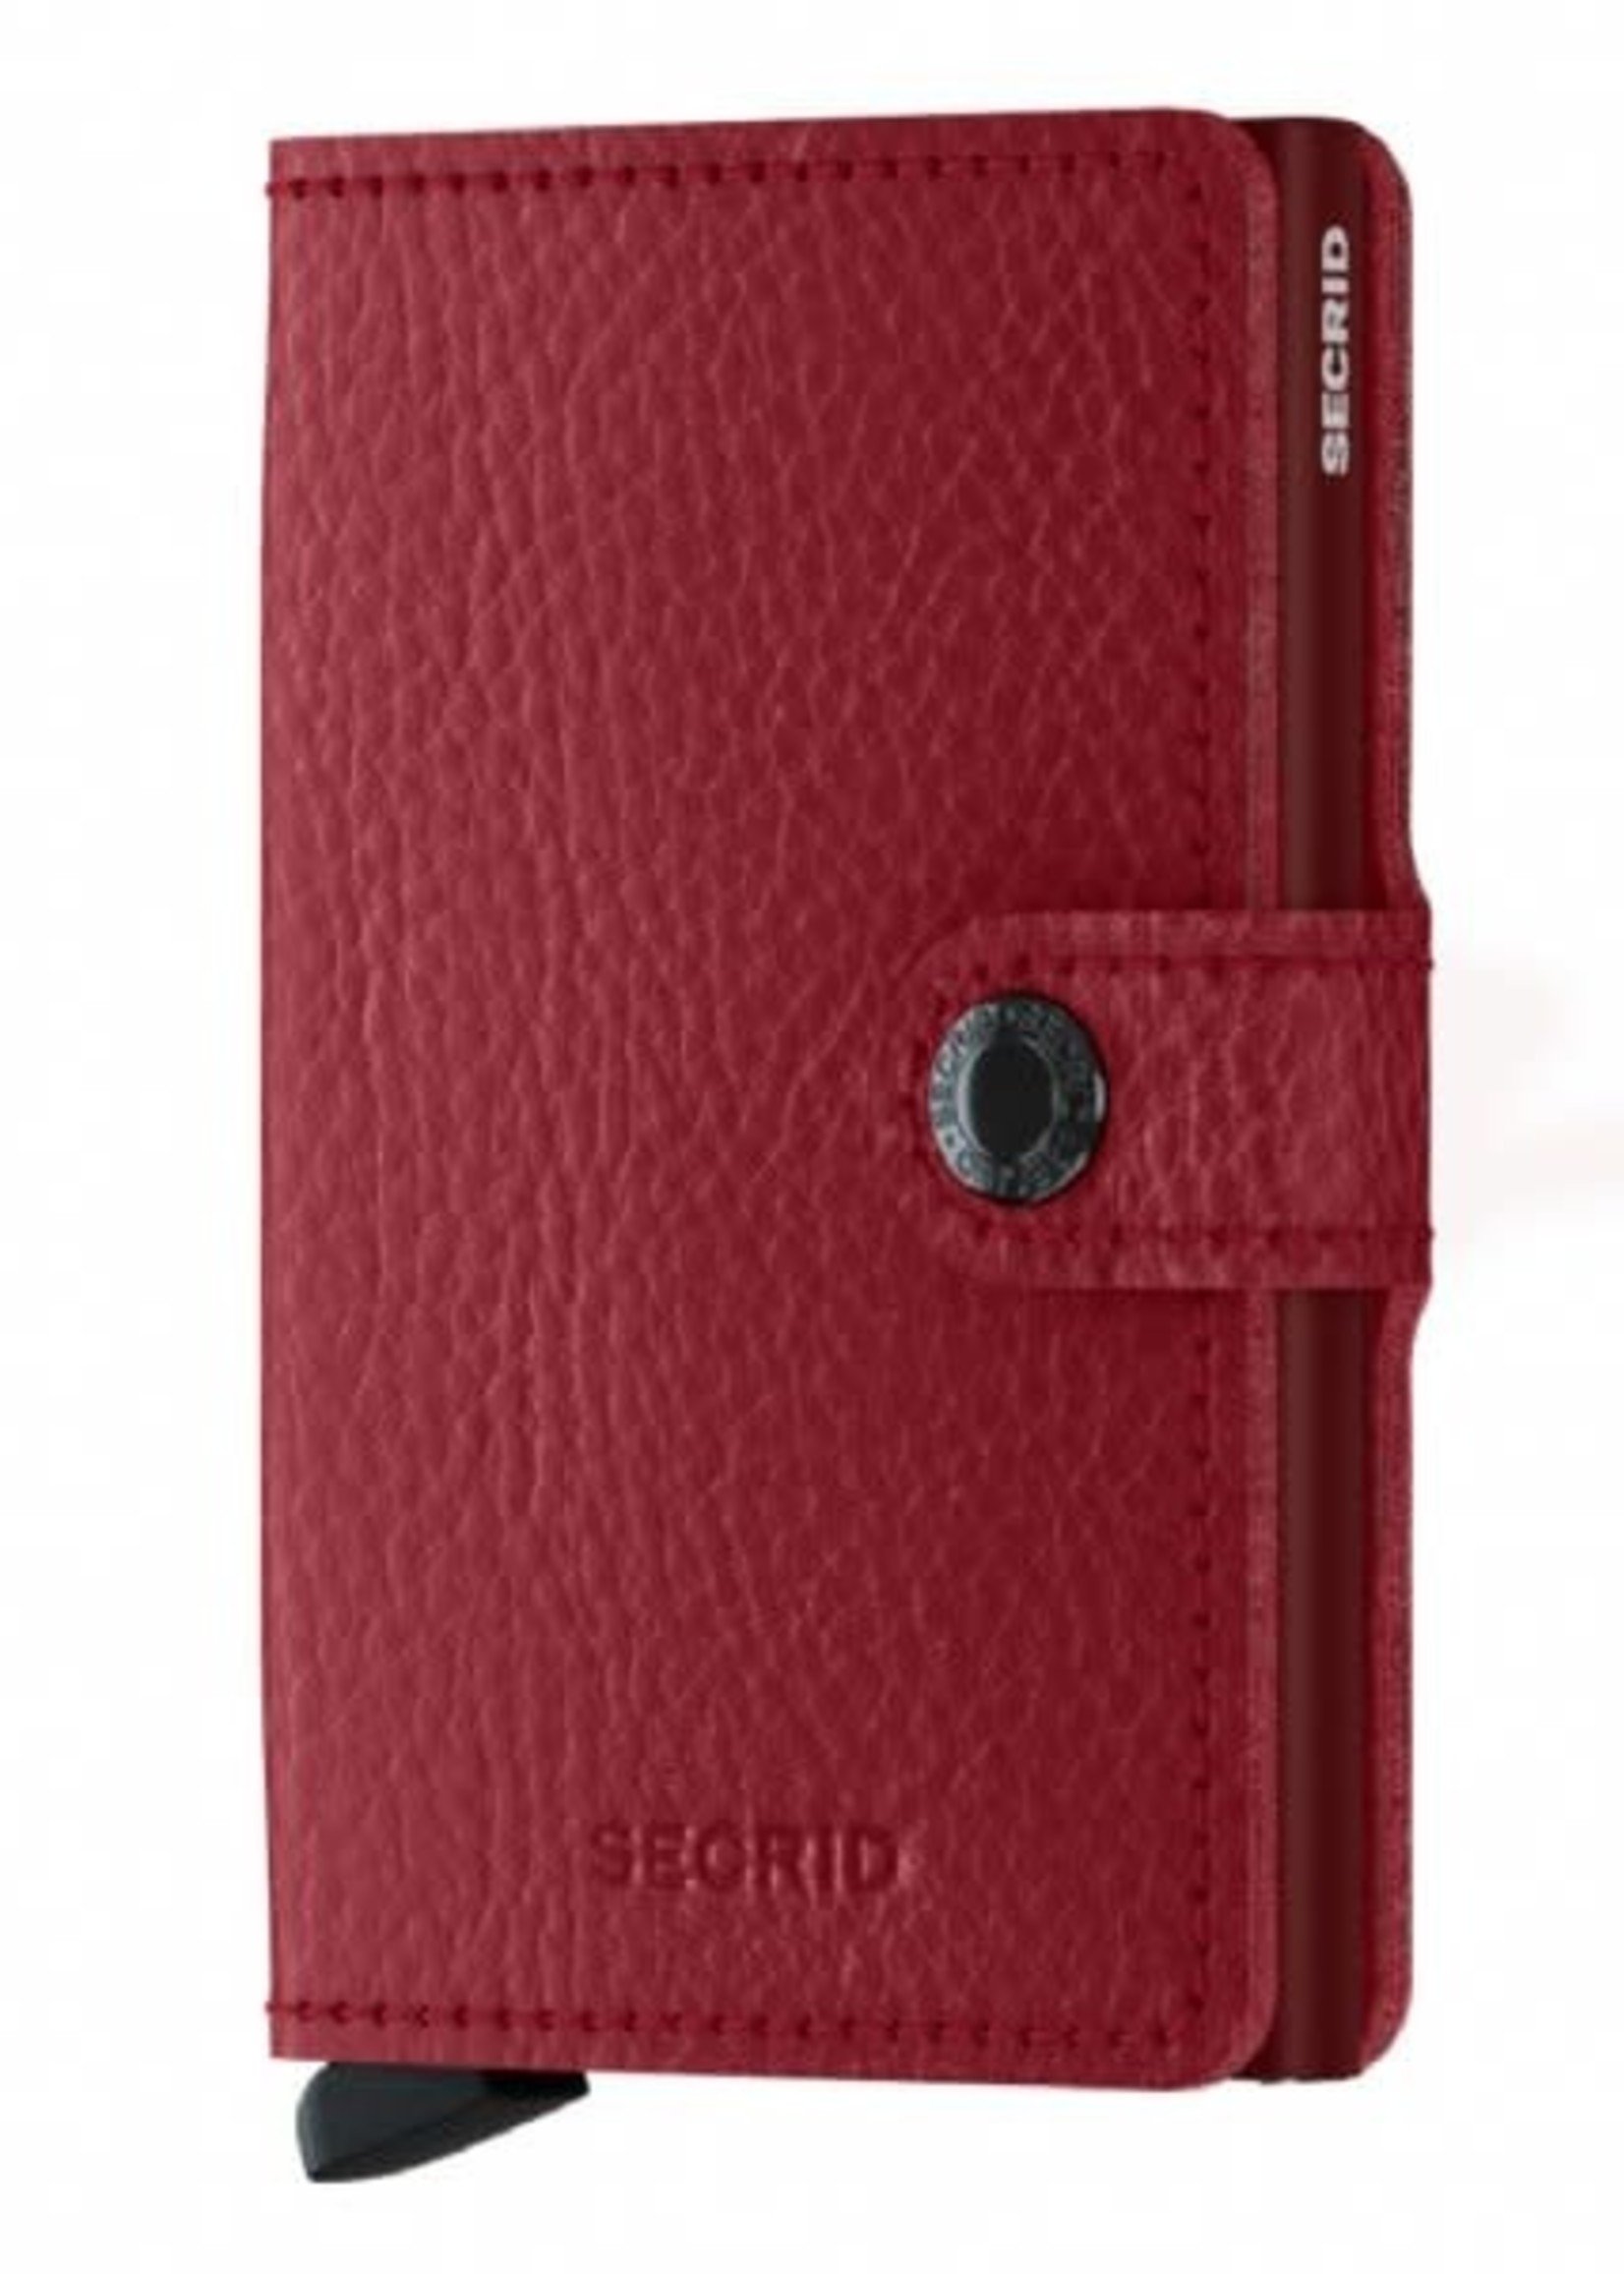 Secrid Mini Wallet Veg Rosso